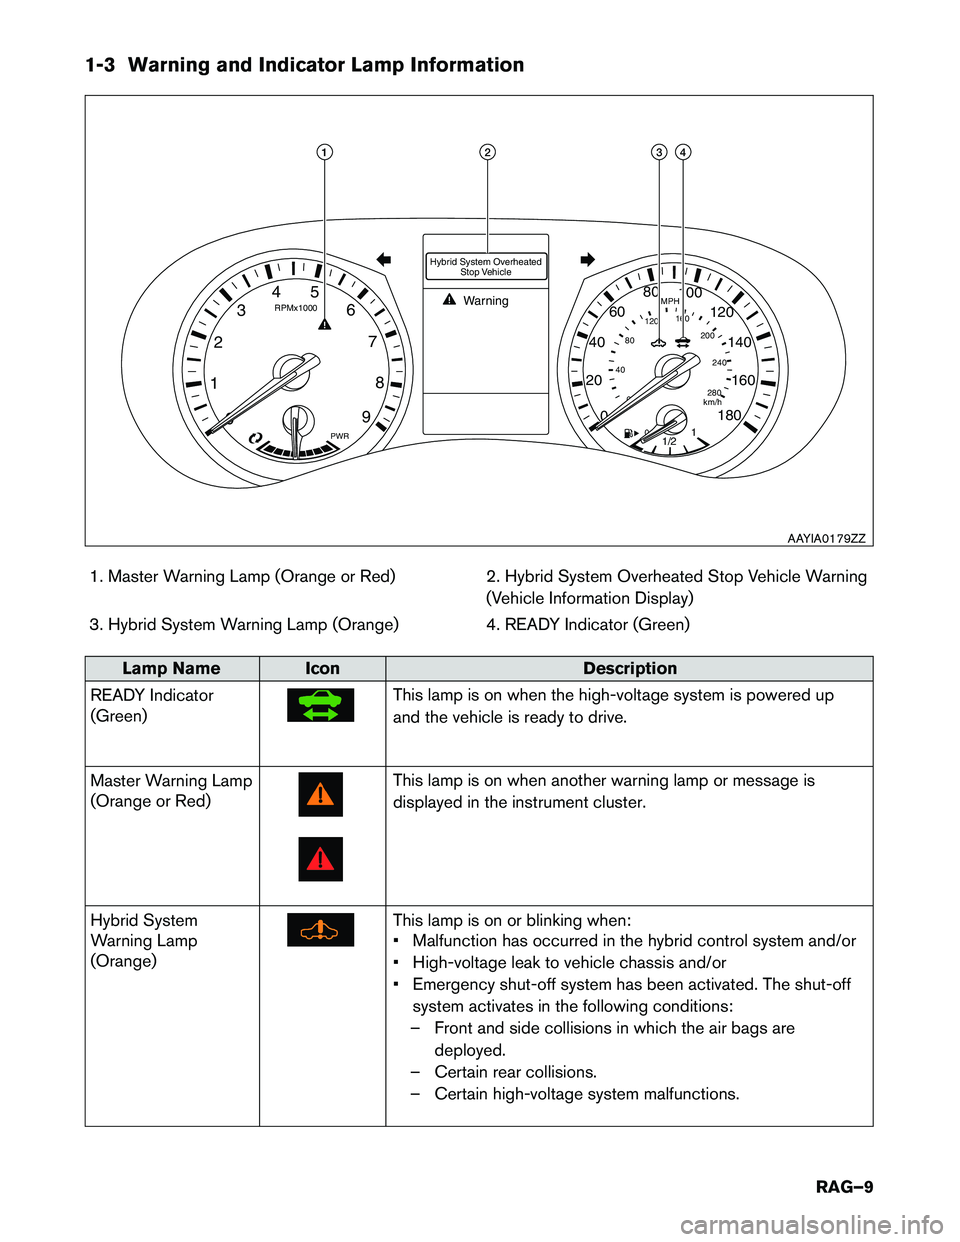 INFINITI Q50 HYBRID 2017  Roadside Assistance Guide 1-3 Warning and Indicator Lamp Information1. Master Warning Lamp (Orange or Red) 2. Hybrid System Overheated Stop Vehicle Warning (Vehicle Information Display)
3. Hybrid System Warning Lamp (Orange) 4